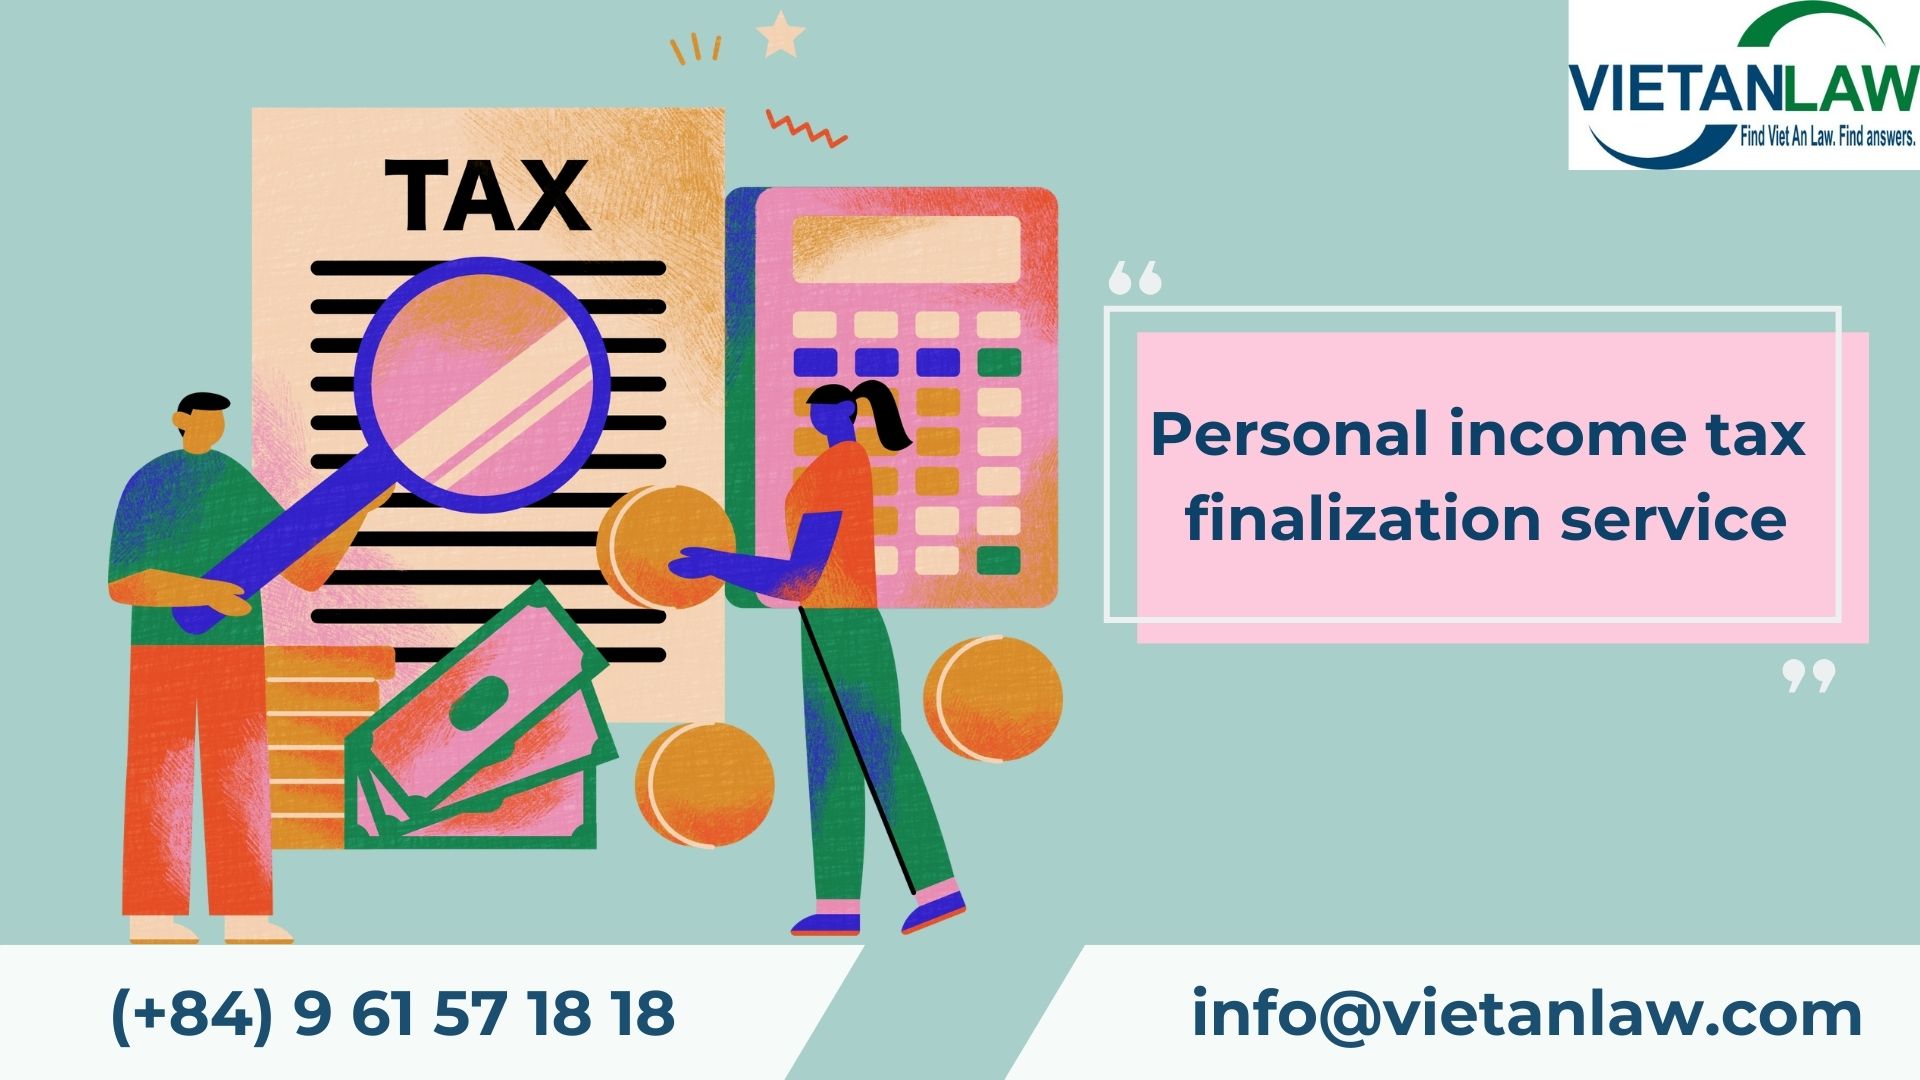 Personal income tax finalization service in Vietnam